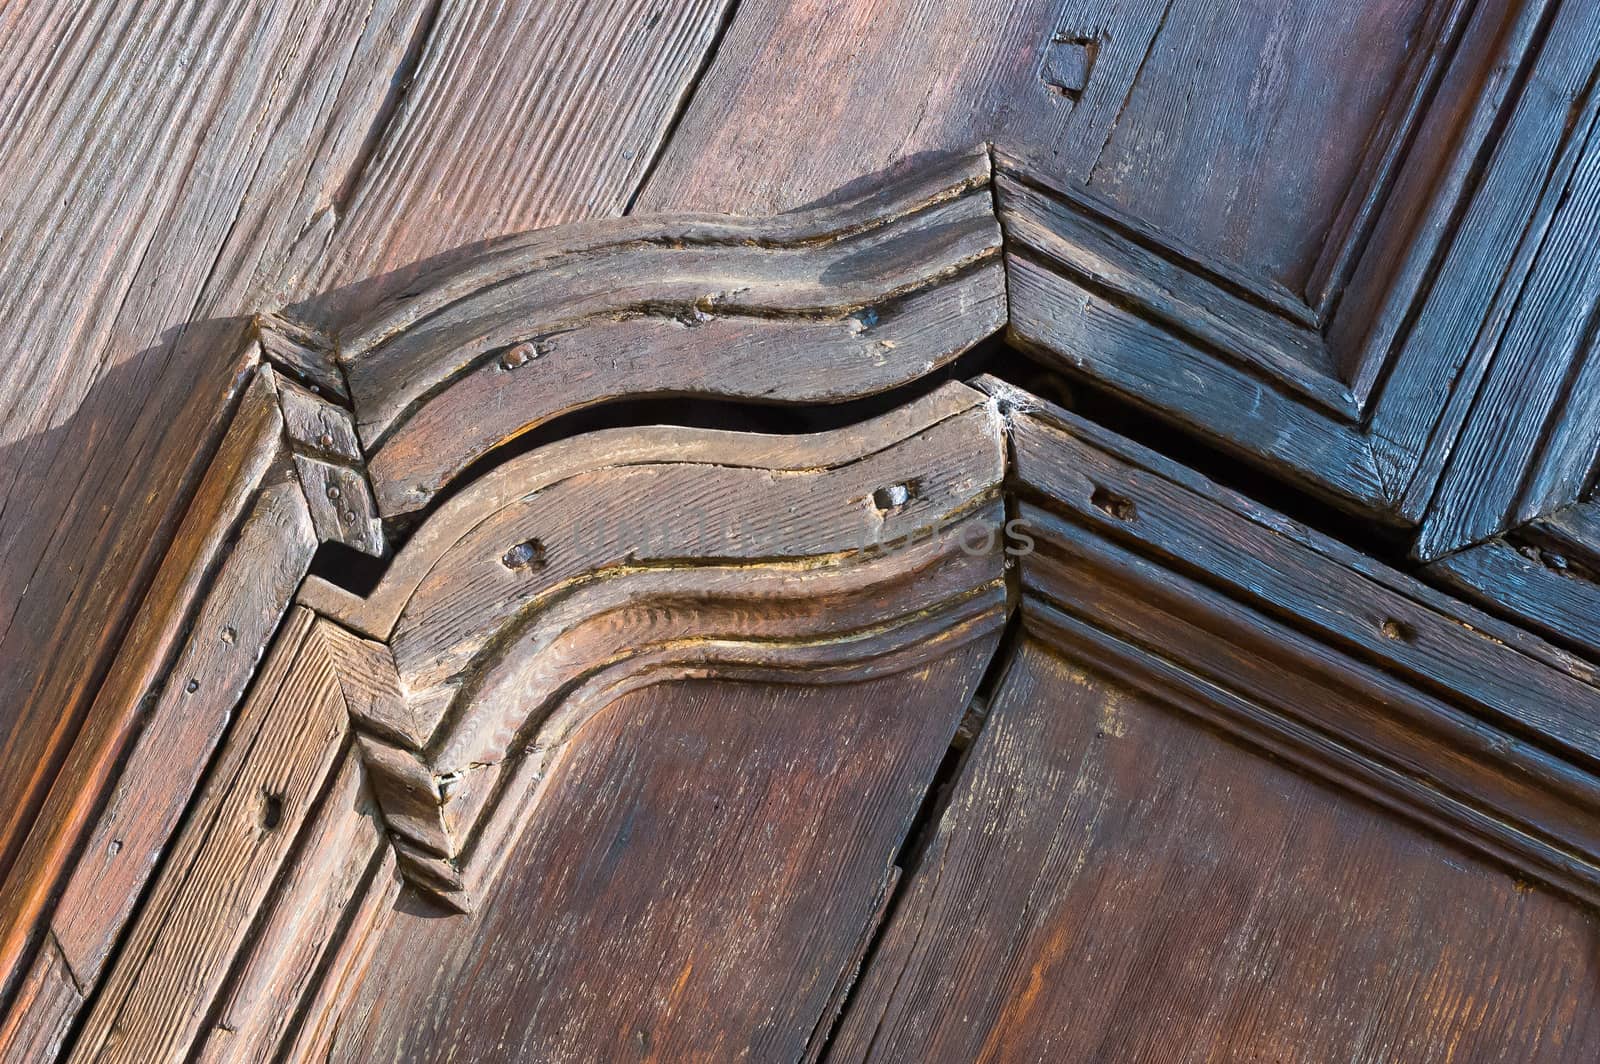 A detail of an old wooden door